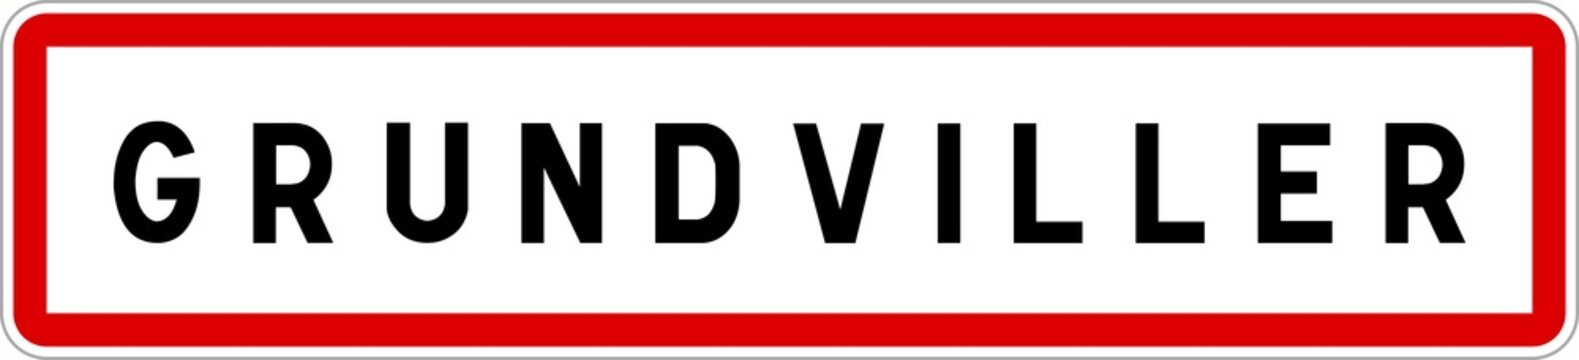 Panneau entrée ville agglomération Grundviller / Town entrance sign Grundviller